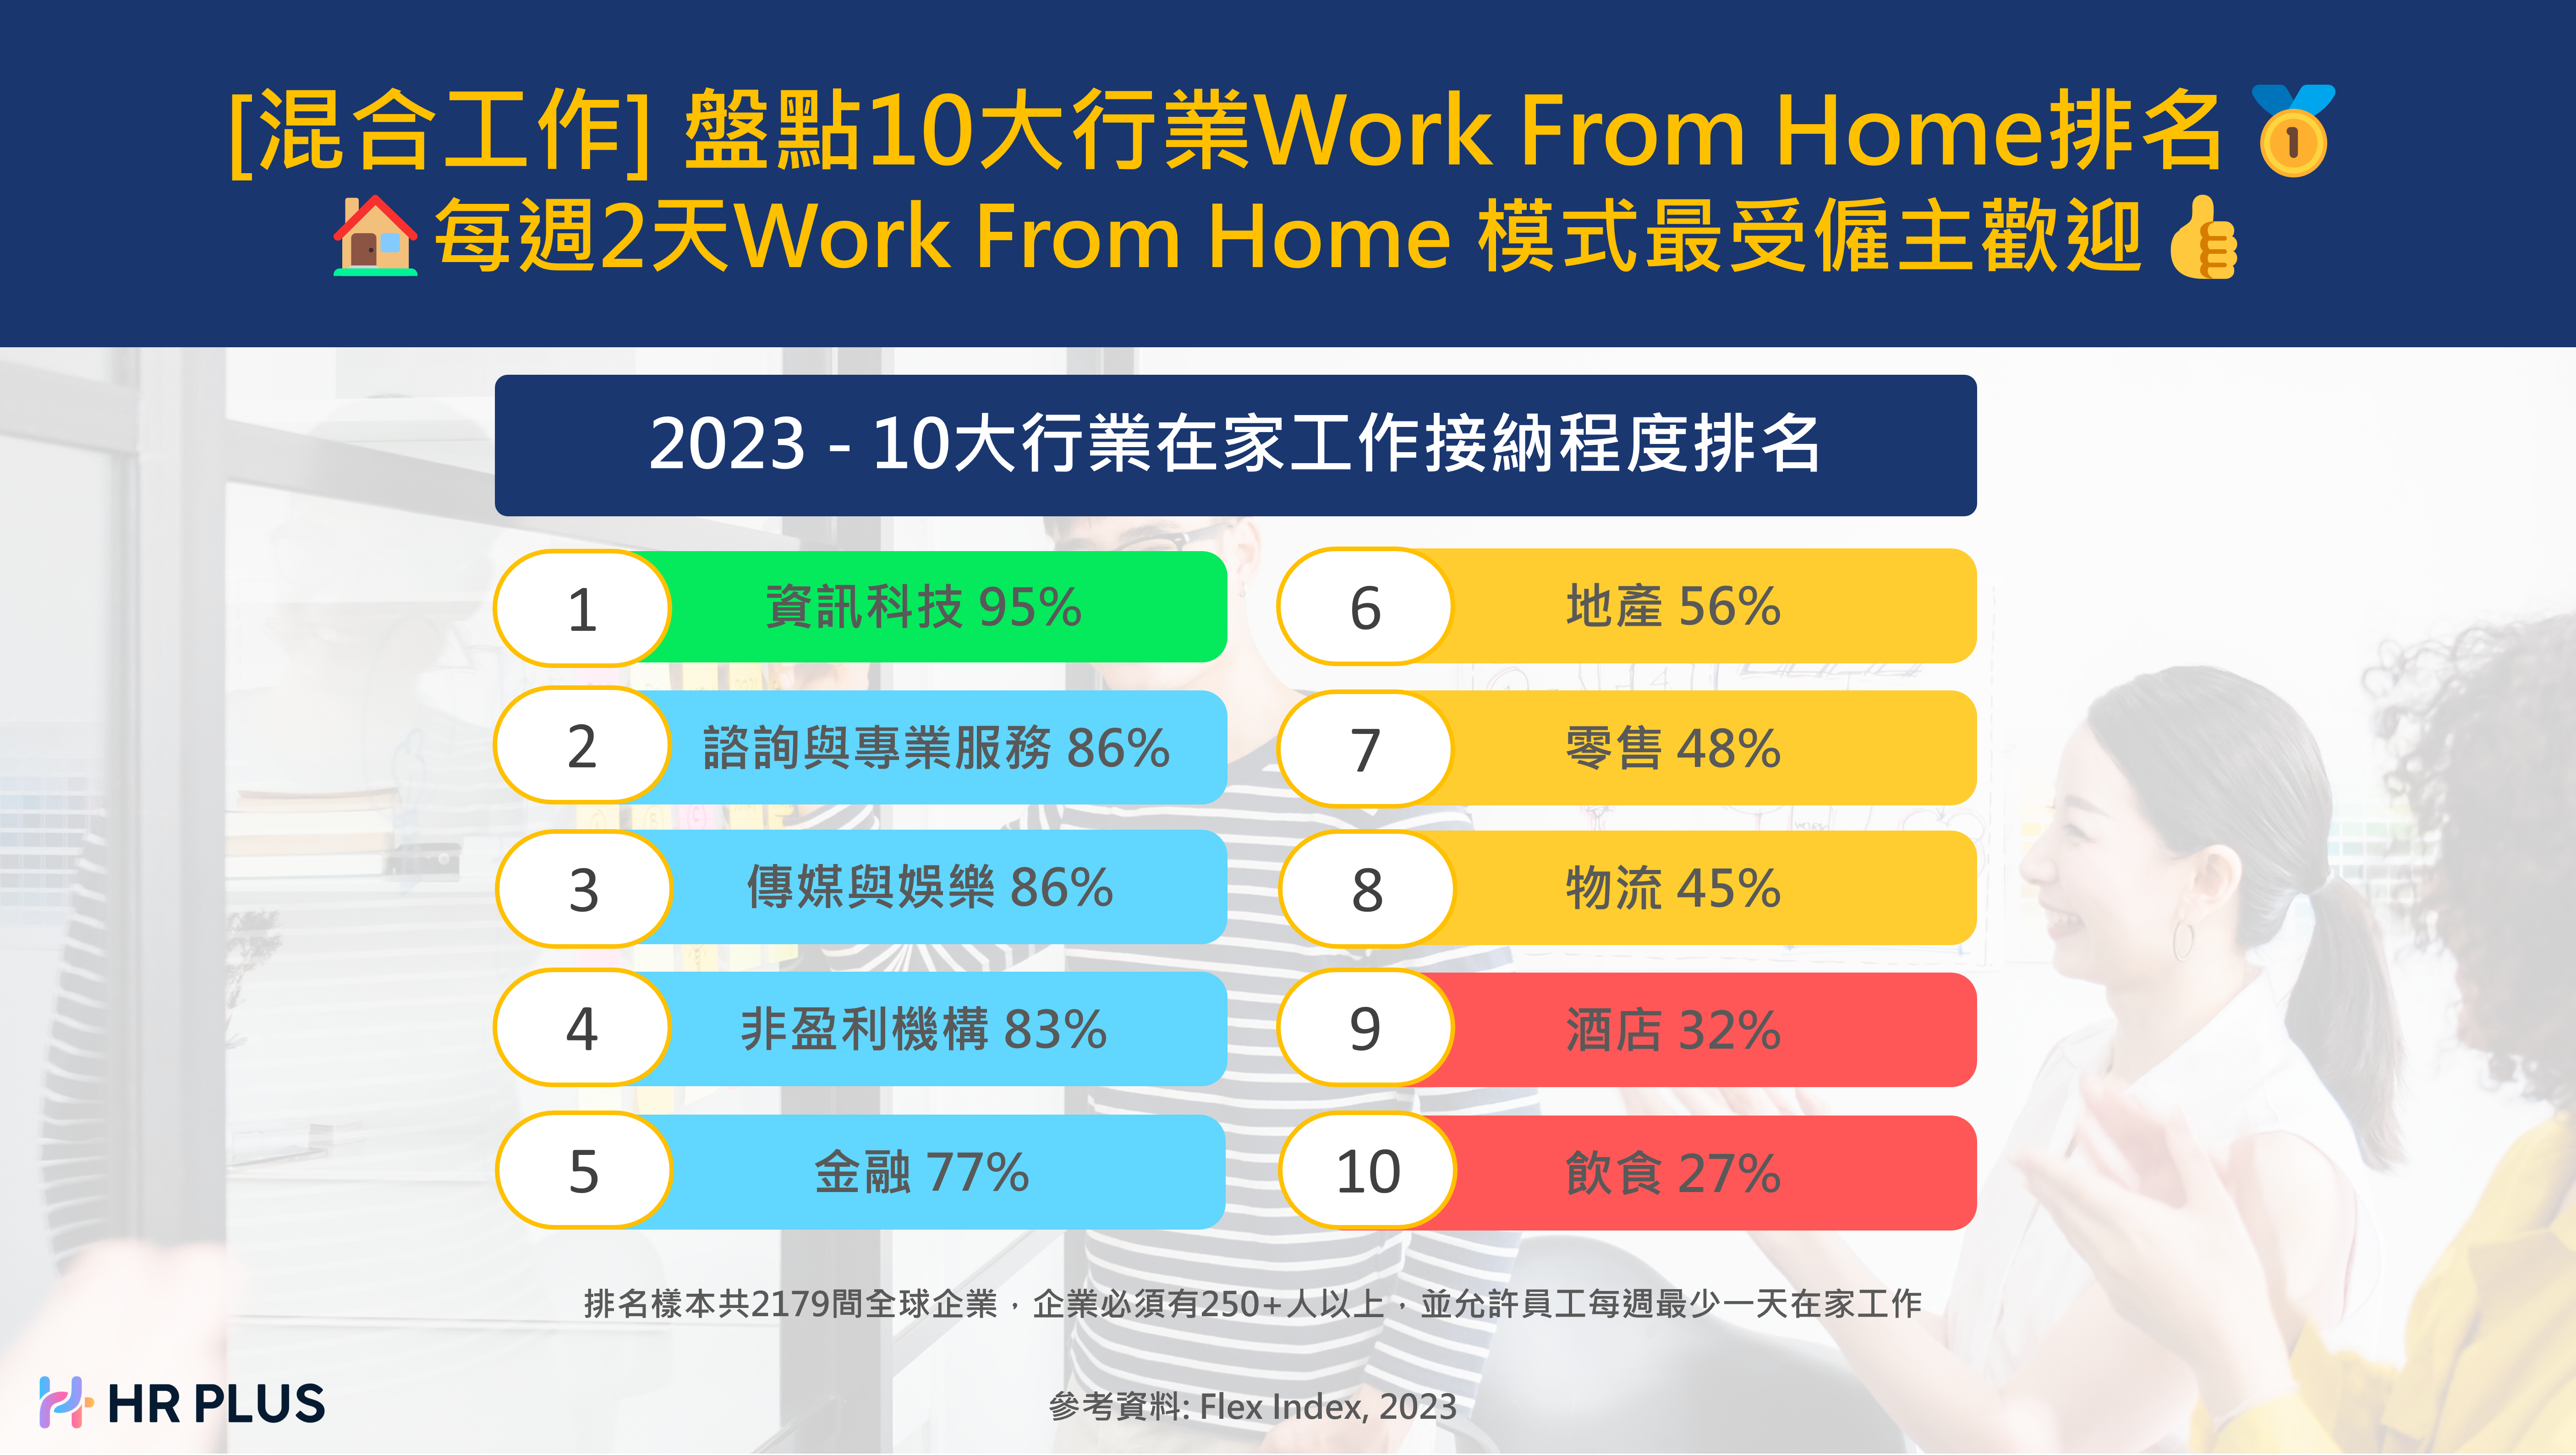 2023 Hybrid work rank by industry 